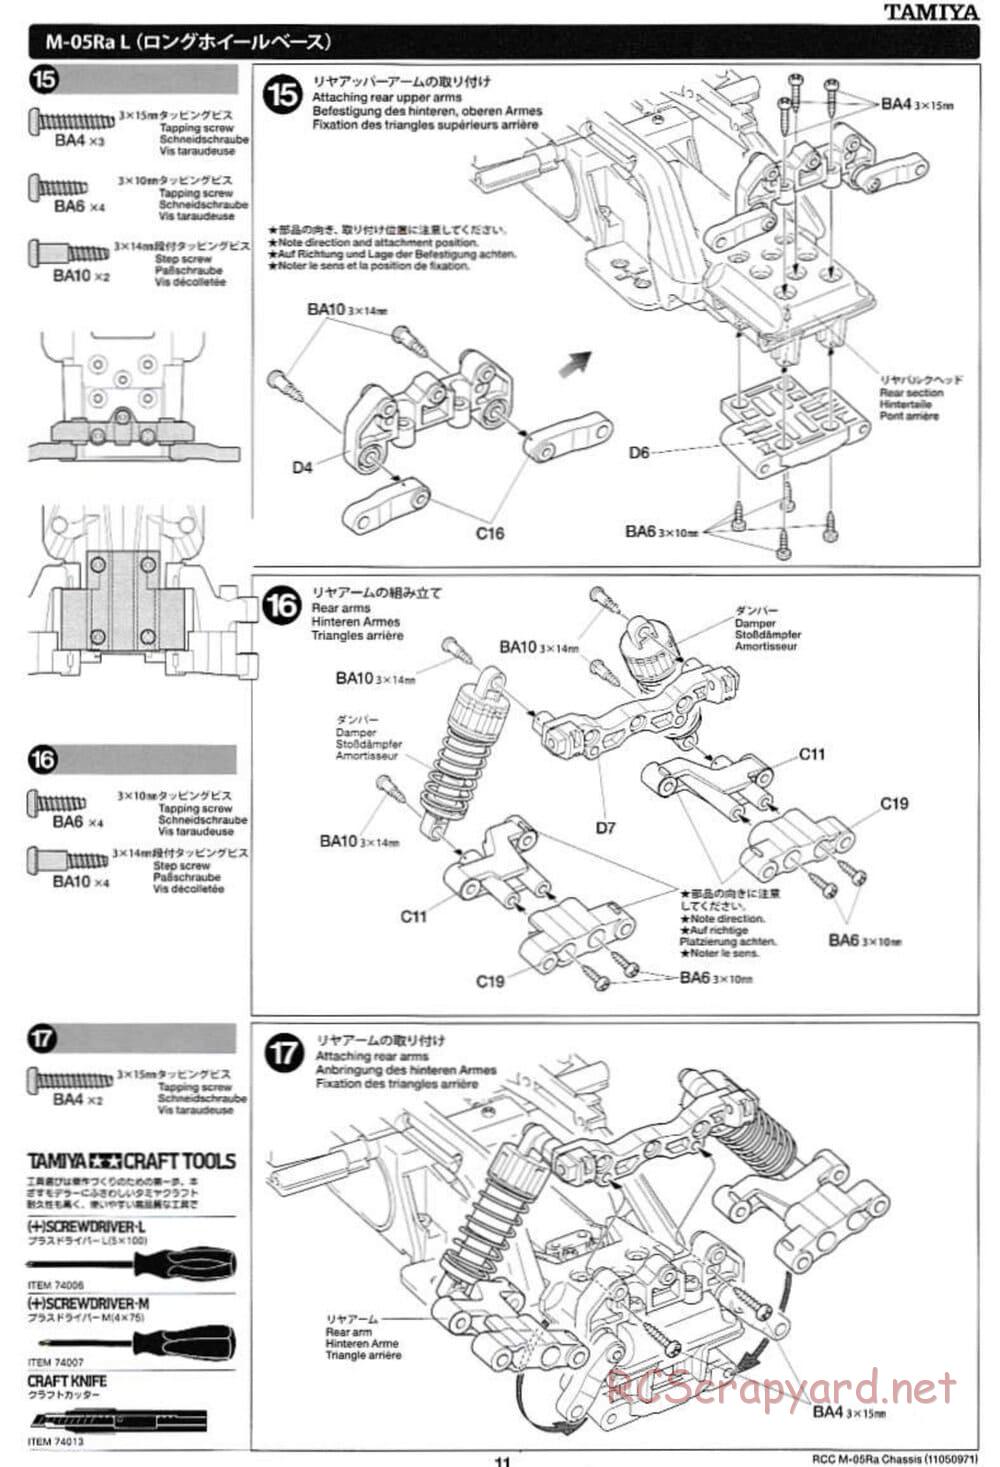 Tamiya - M-05Ra Chassis - Manual - Page 11